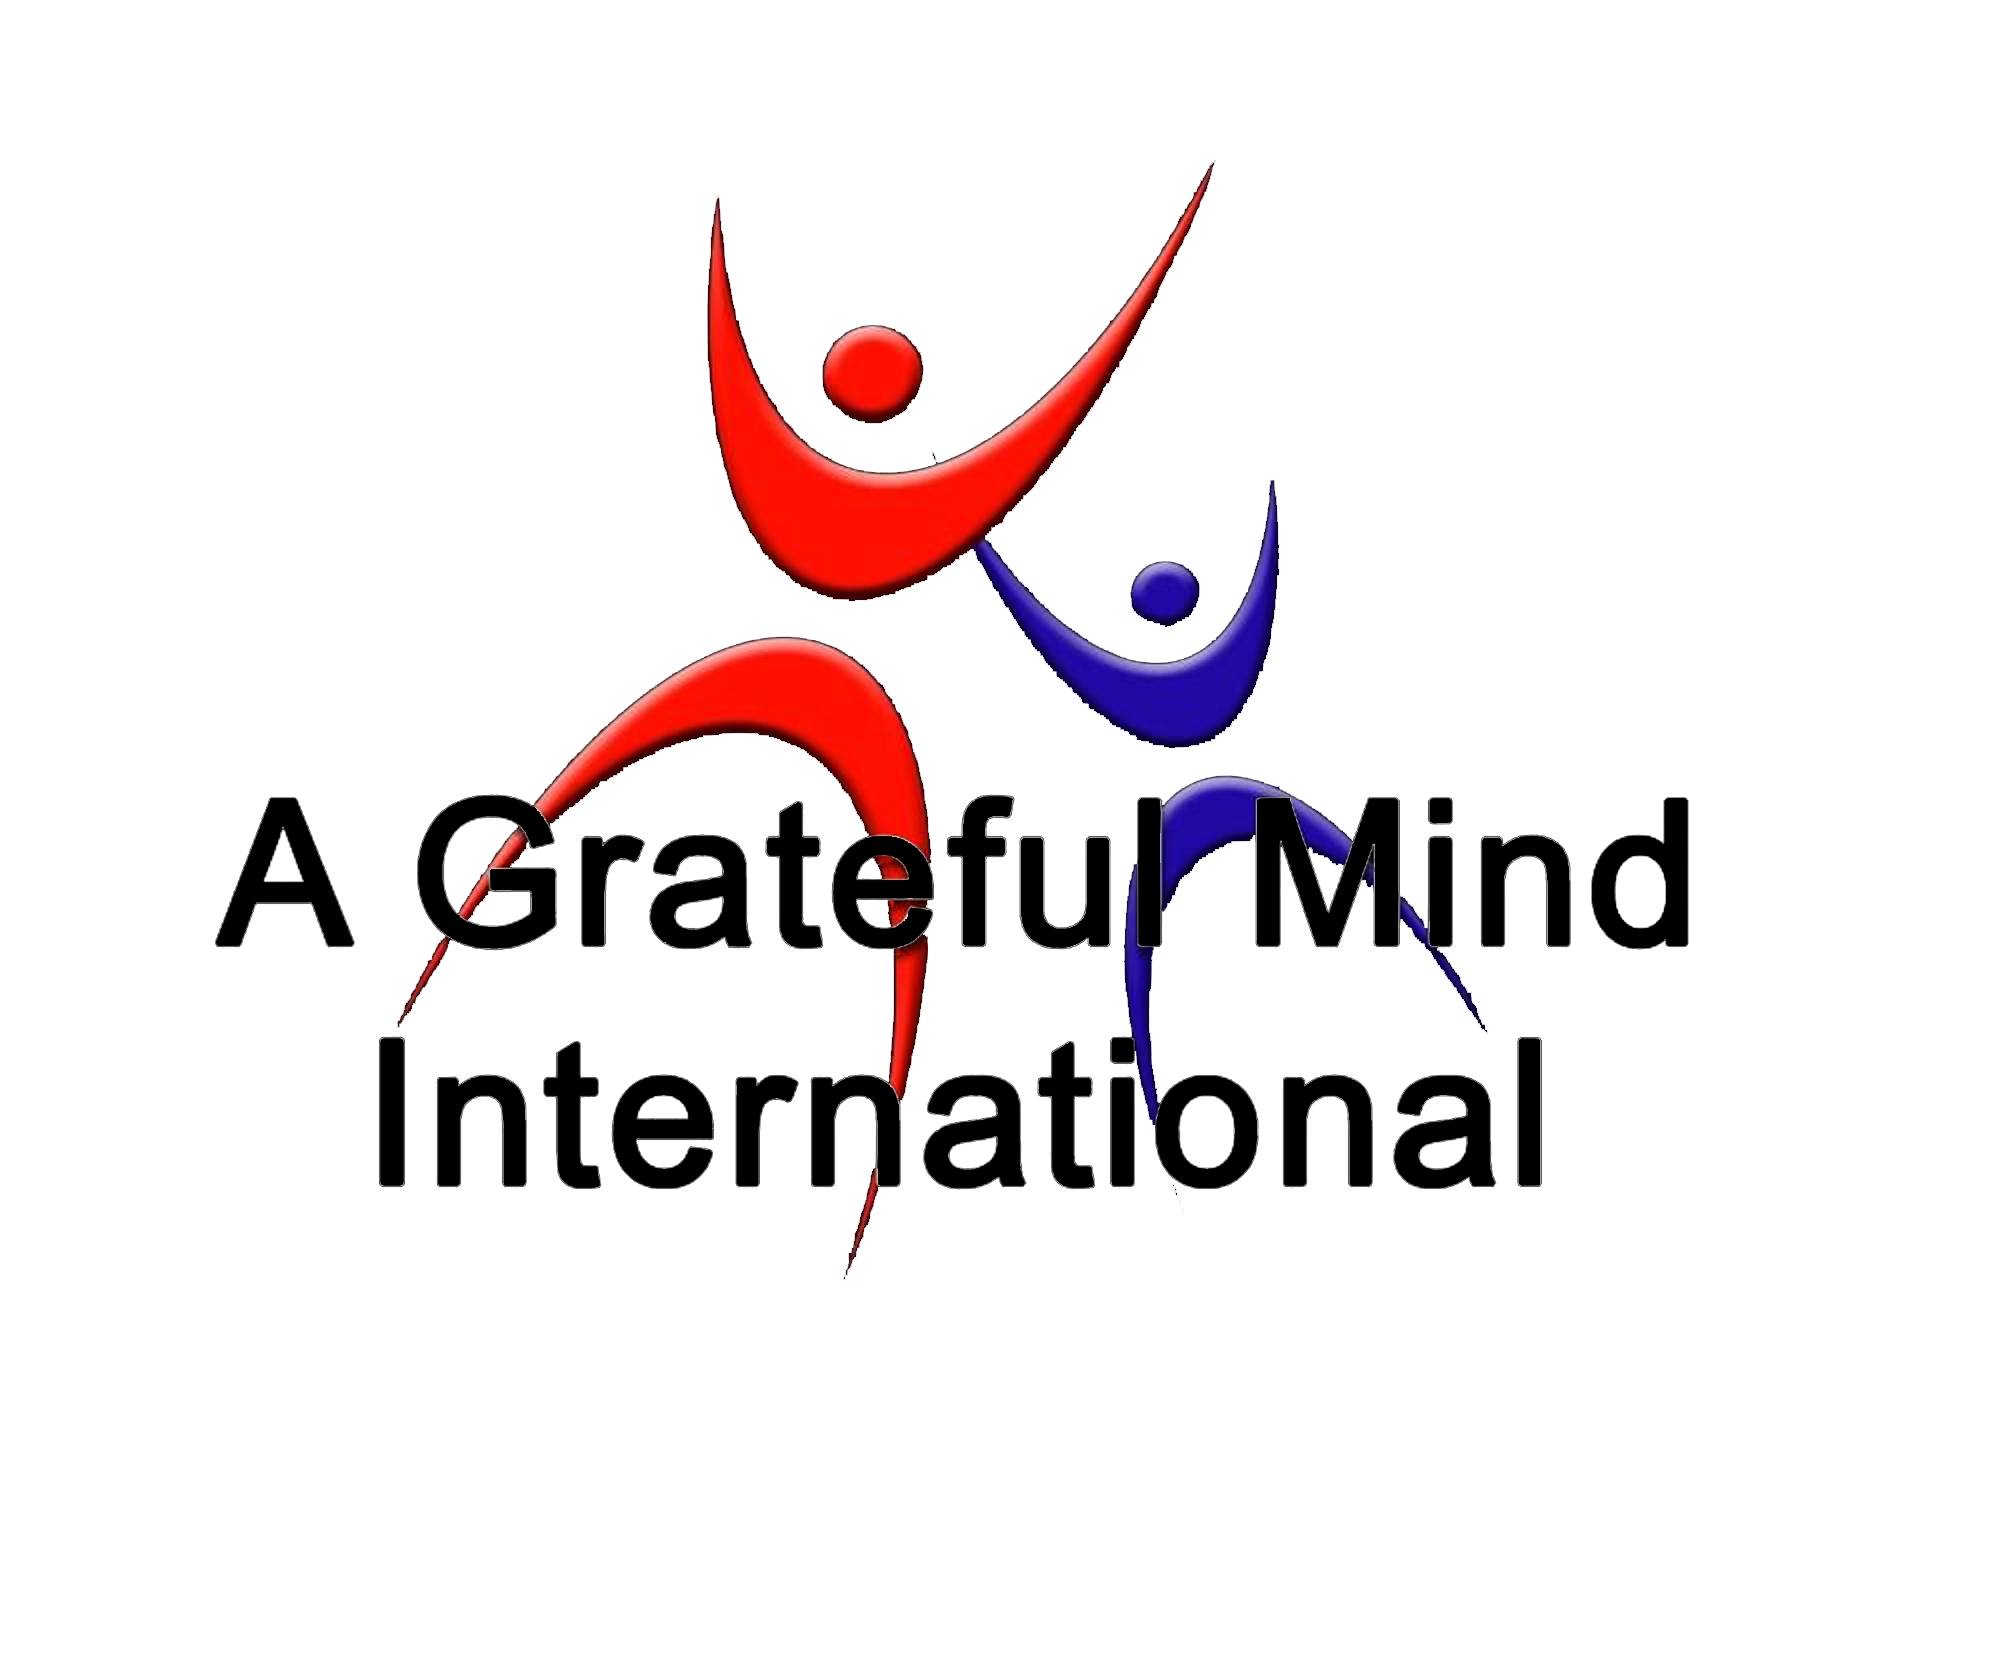 A Grateful Mind International